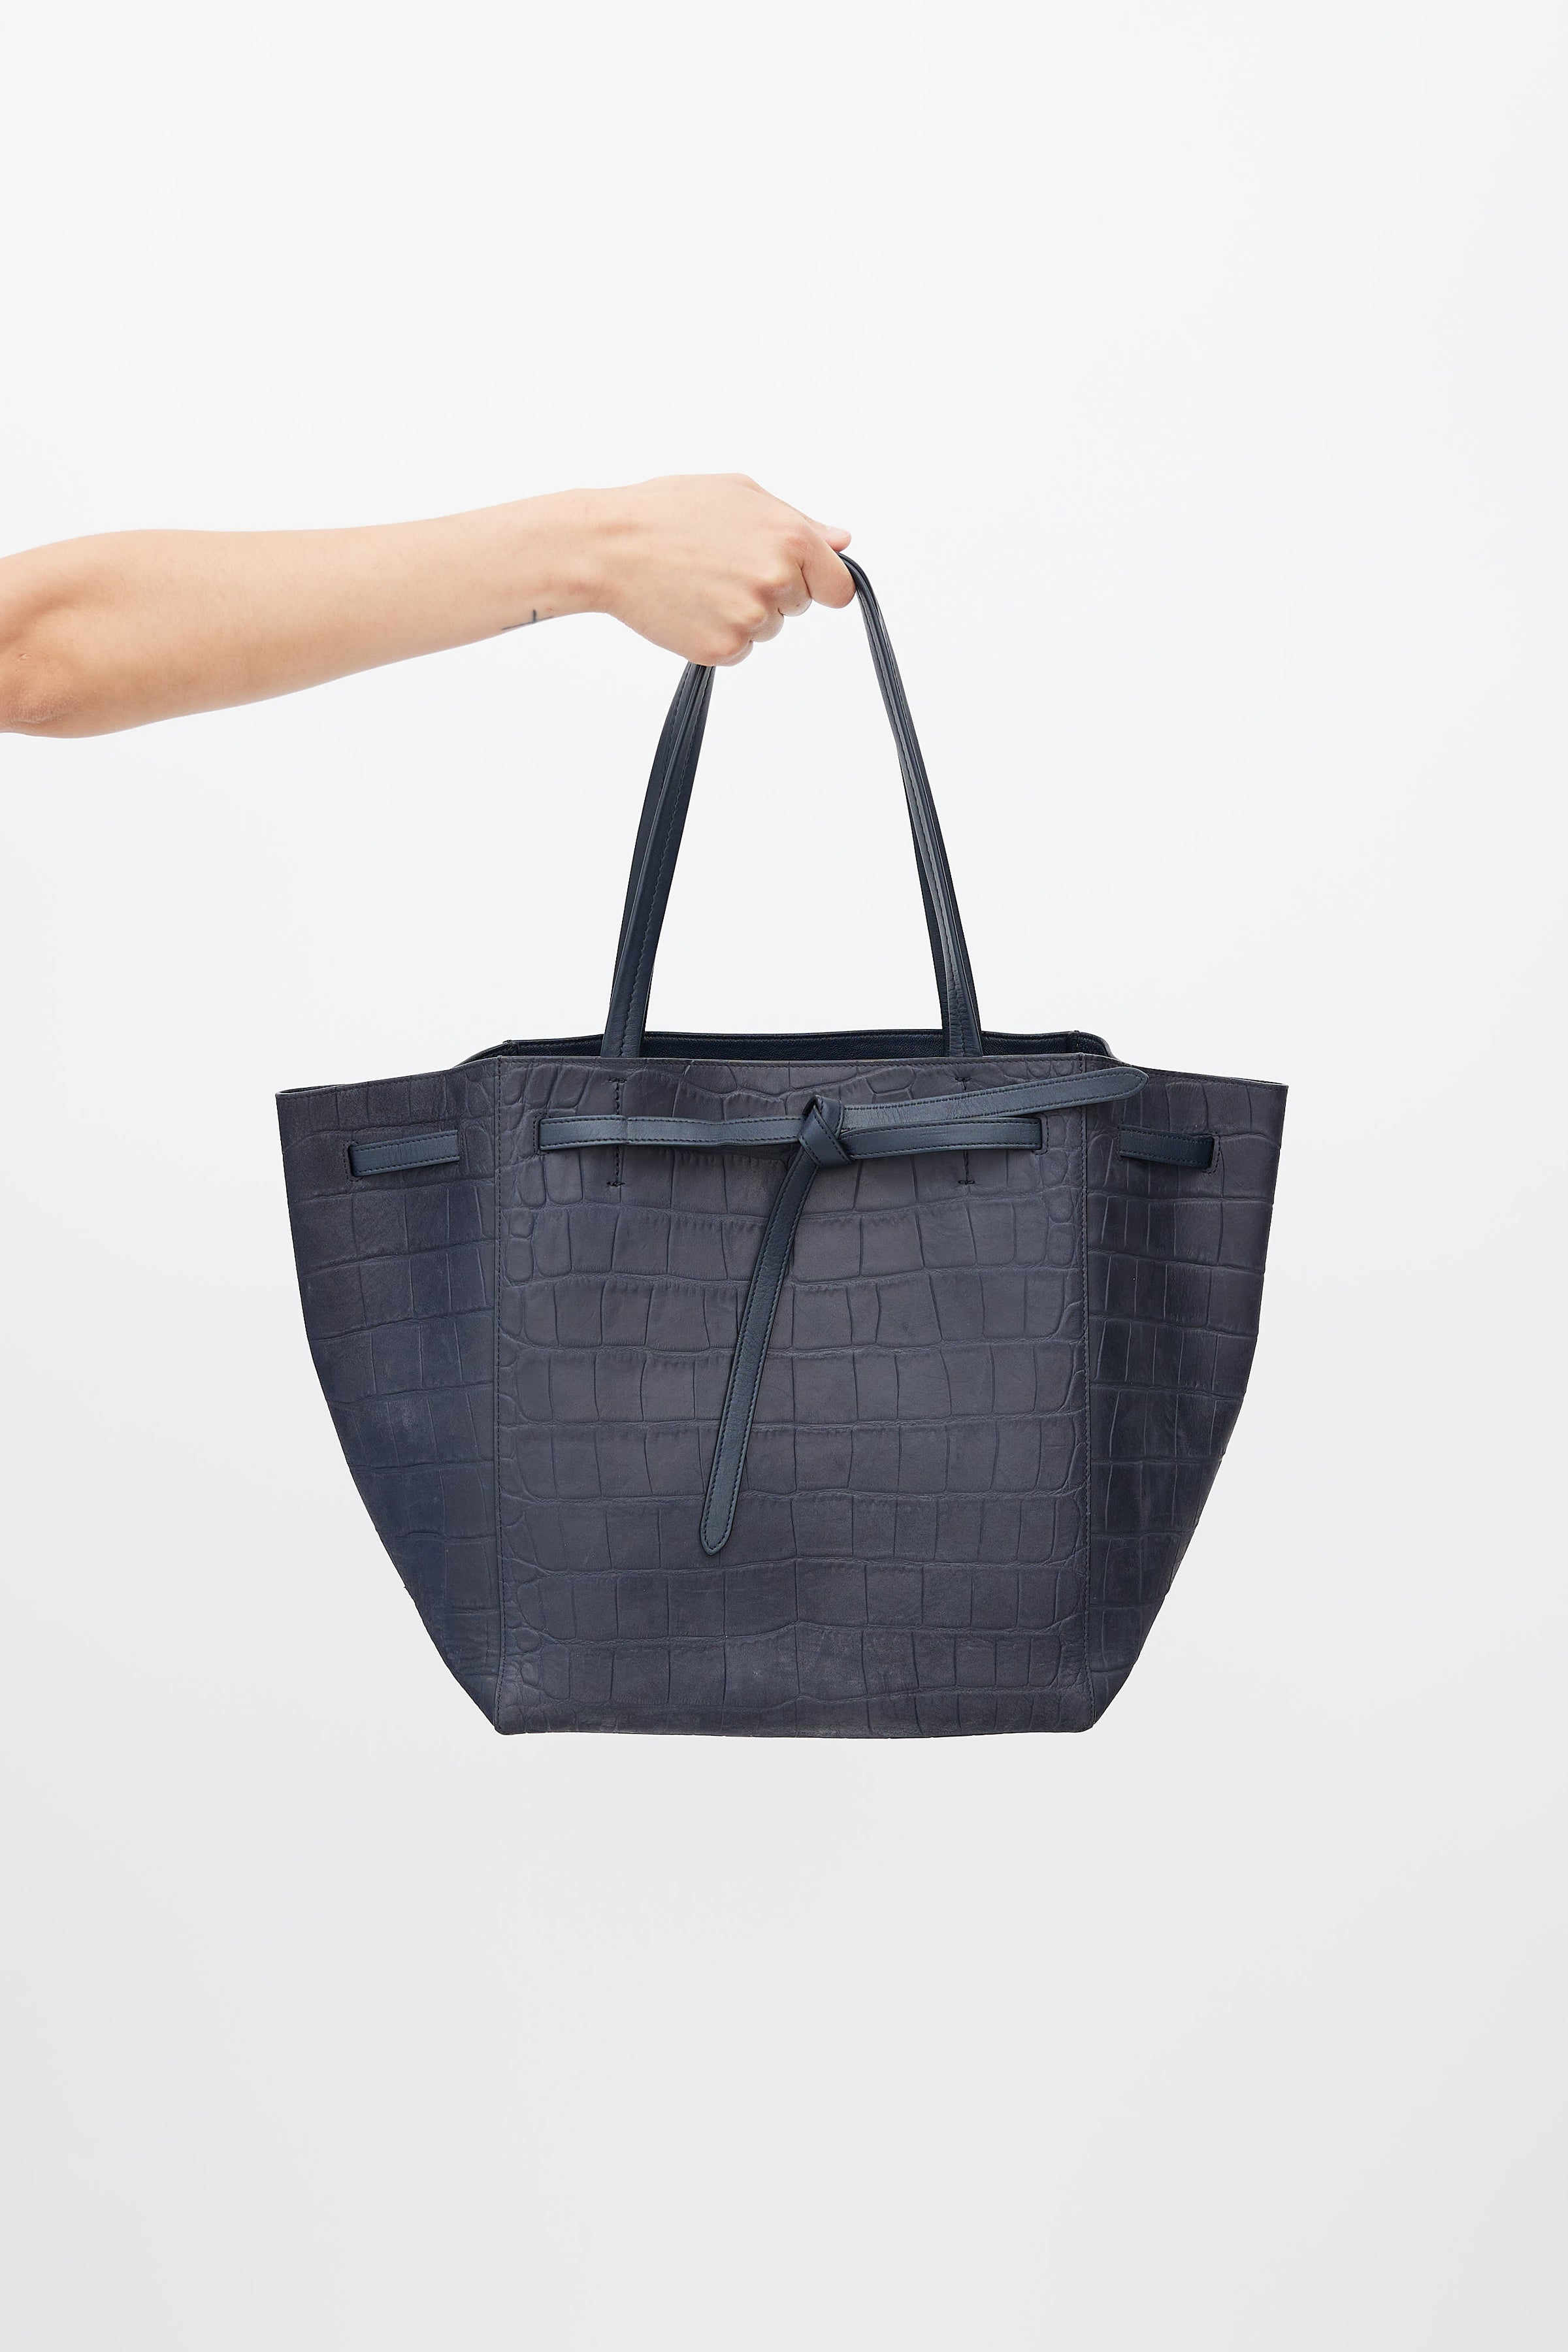 Celine Pre-owned Women's Leather Handbag - Navy - One Size